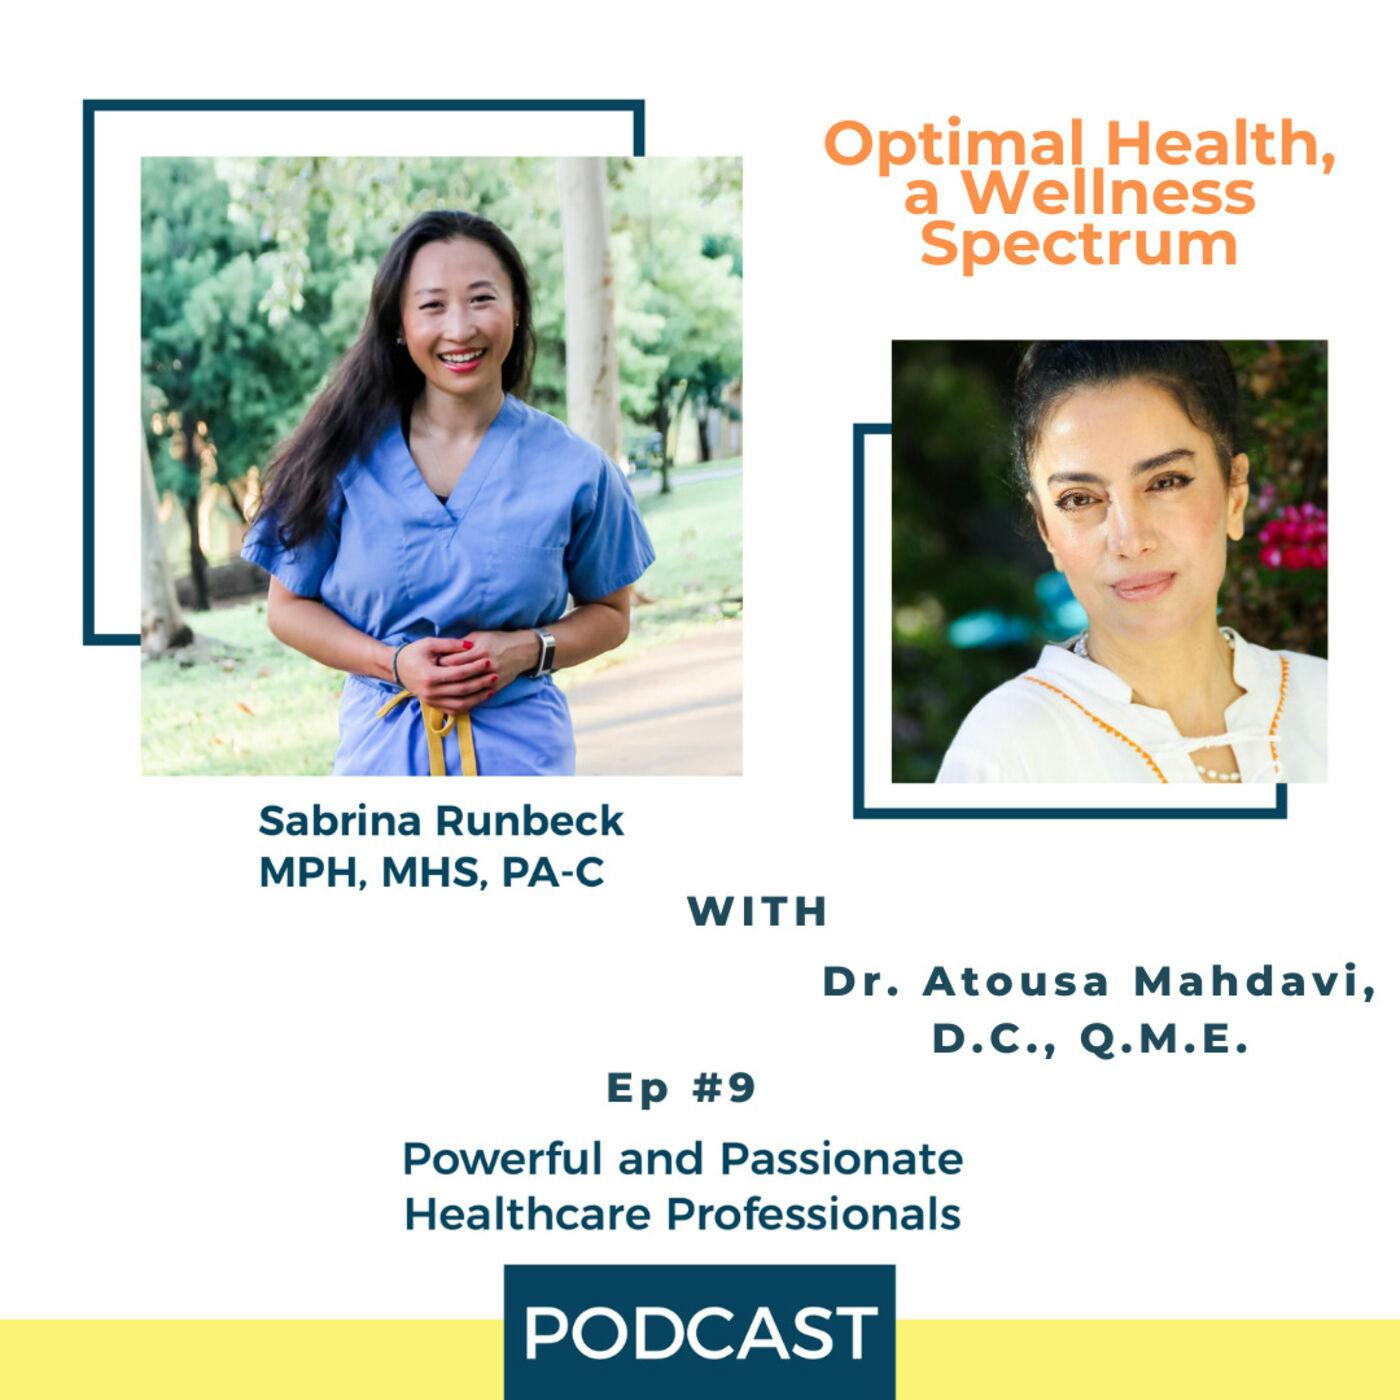 Ep 9 – Optimal Health, a Wellness Spectrum with Dr. Atousa Mahdavi